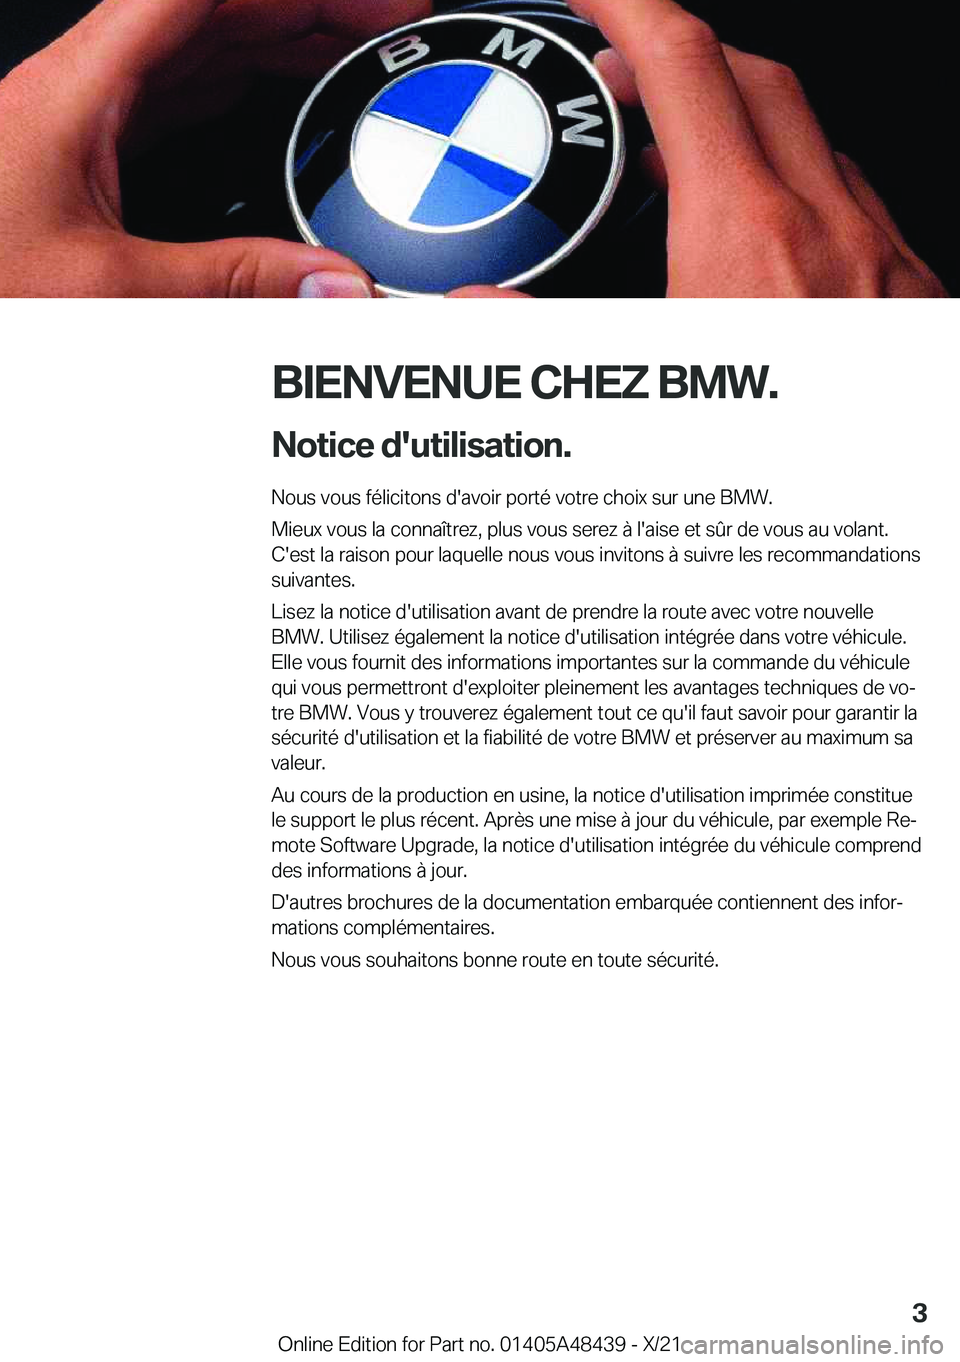 BMW X7 2022  Notices Demploi (in French) �B�I�E�N�V�E�N�U�E��C�H�E�Z��B�M�W�.�N�o�t�i�c�e��d�'�u�t�i�l�i�s�a�t�i�o�n�.
�N�o�u�s��v�o�u�s��f�é�l�i�c�i�t�o�n�s��d�'�a�v�o�i�r��p�o�r�t�é��v�o�t�r�e��c�h�o�i�x��s�u�r��u�n�e�